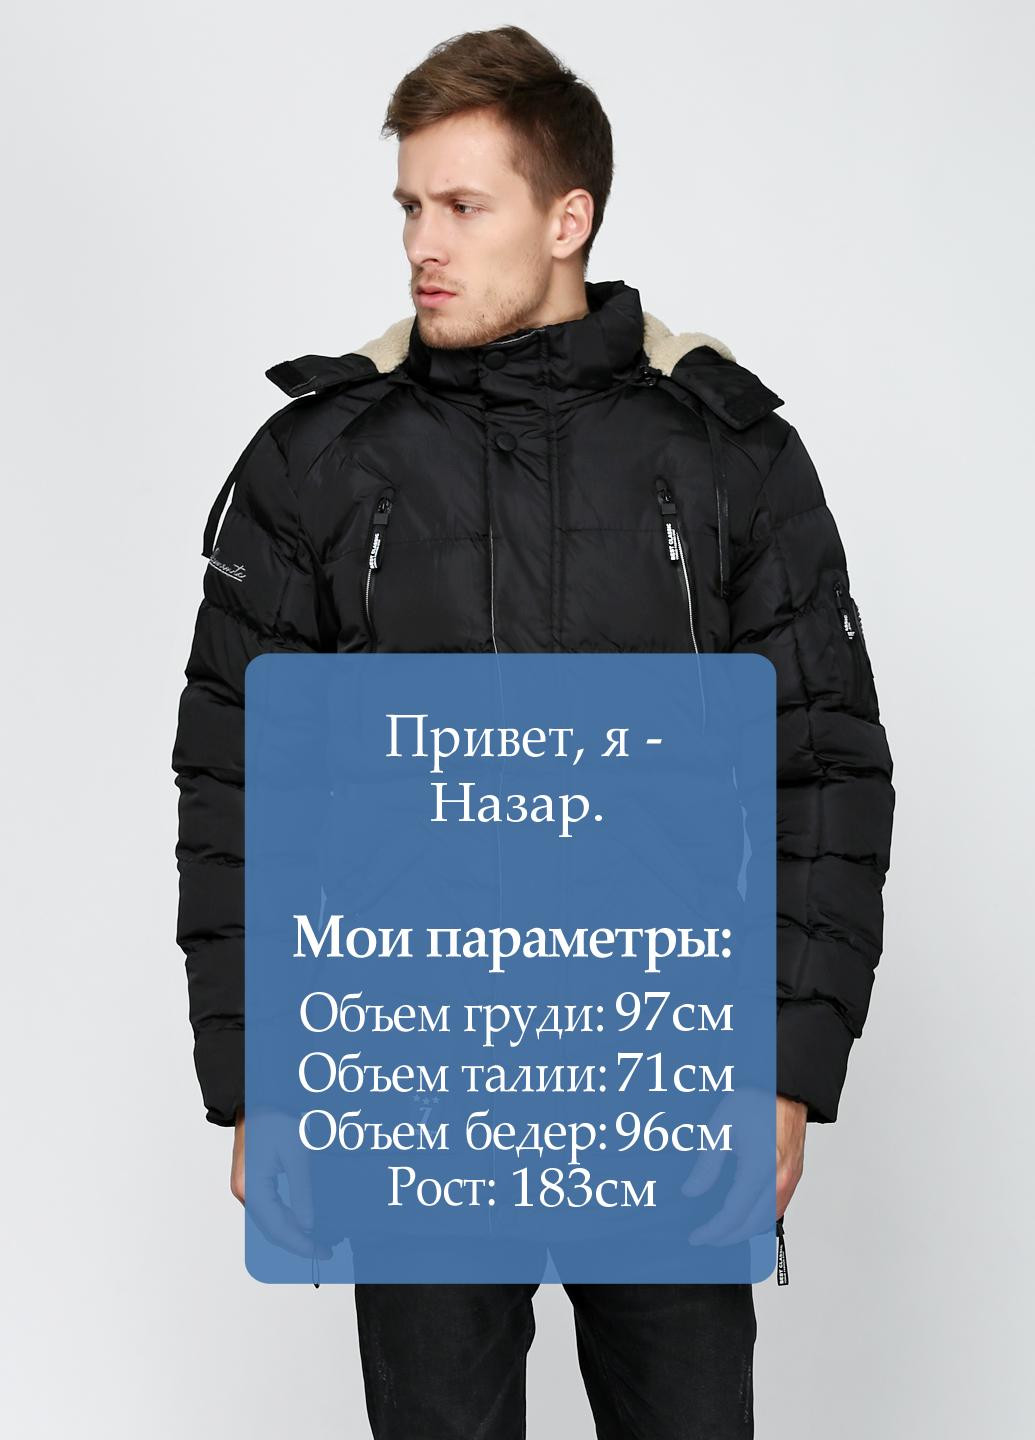 Черная зимняя куртка Яavin